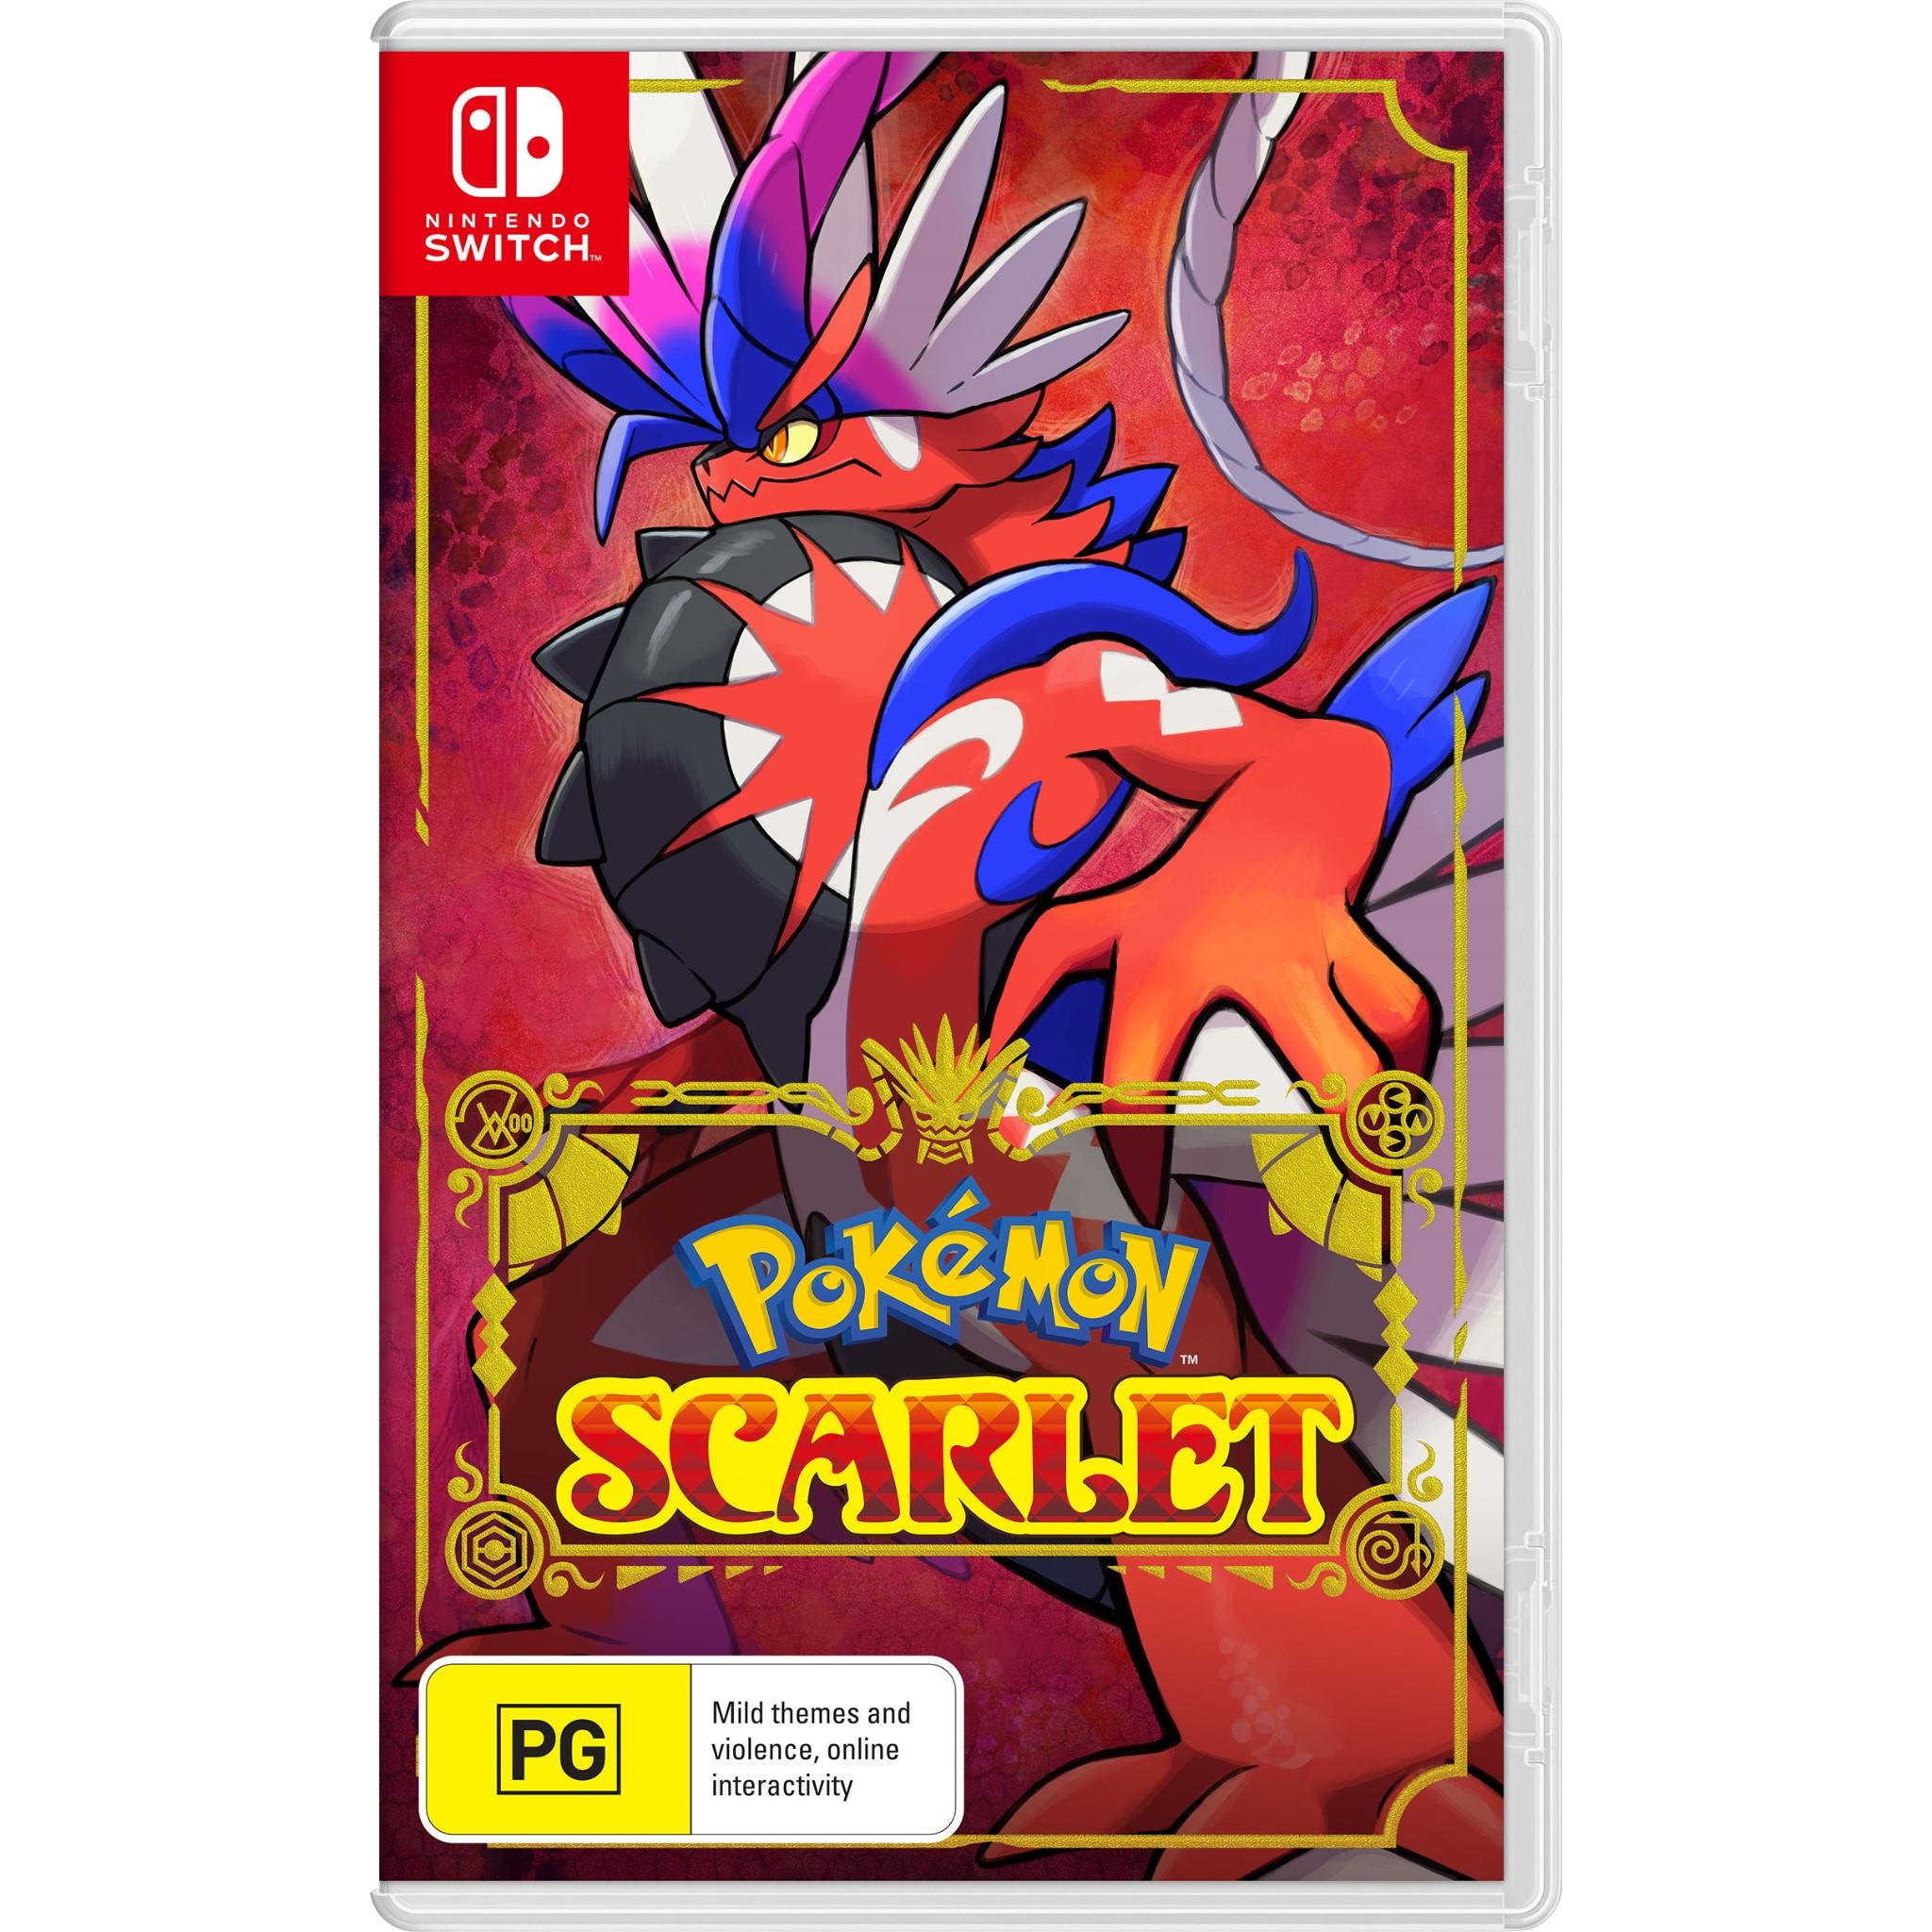 Nintendo Switch OLED Model: Pokemon Scarlet & Violet Edition (Renewed)